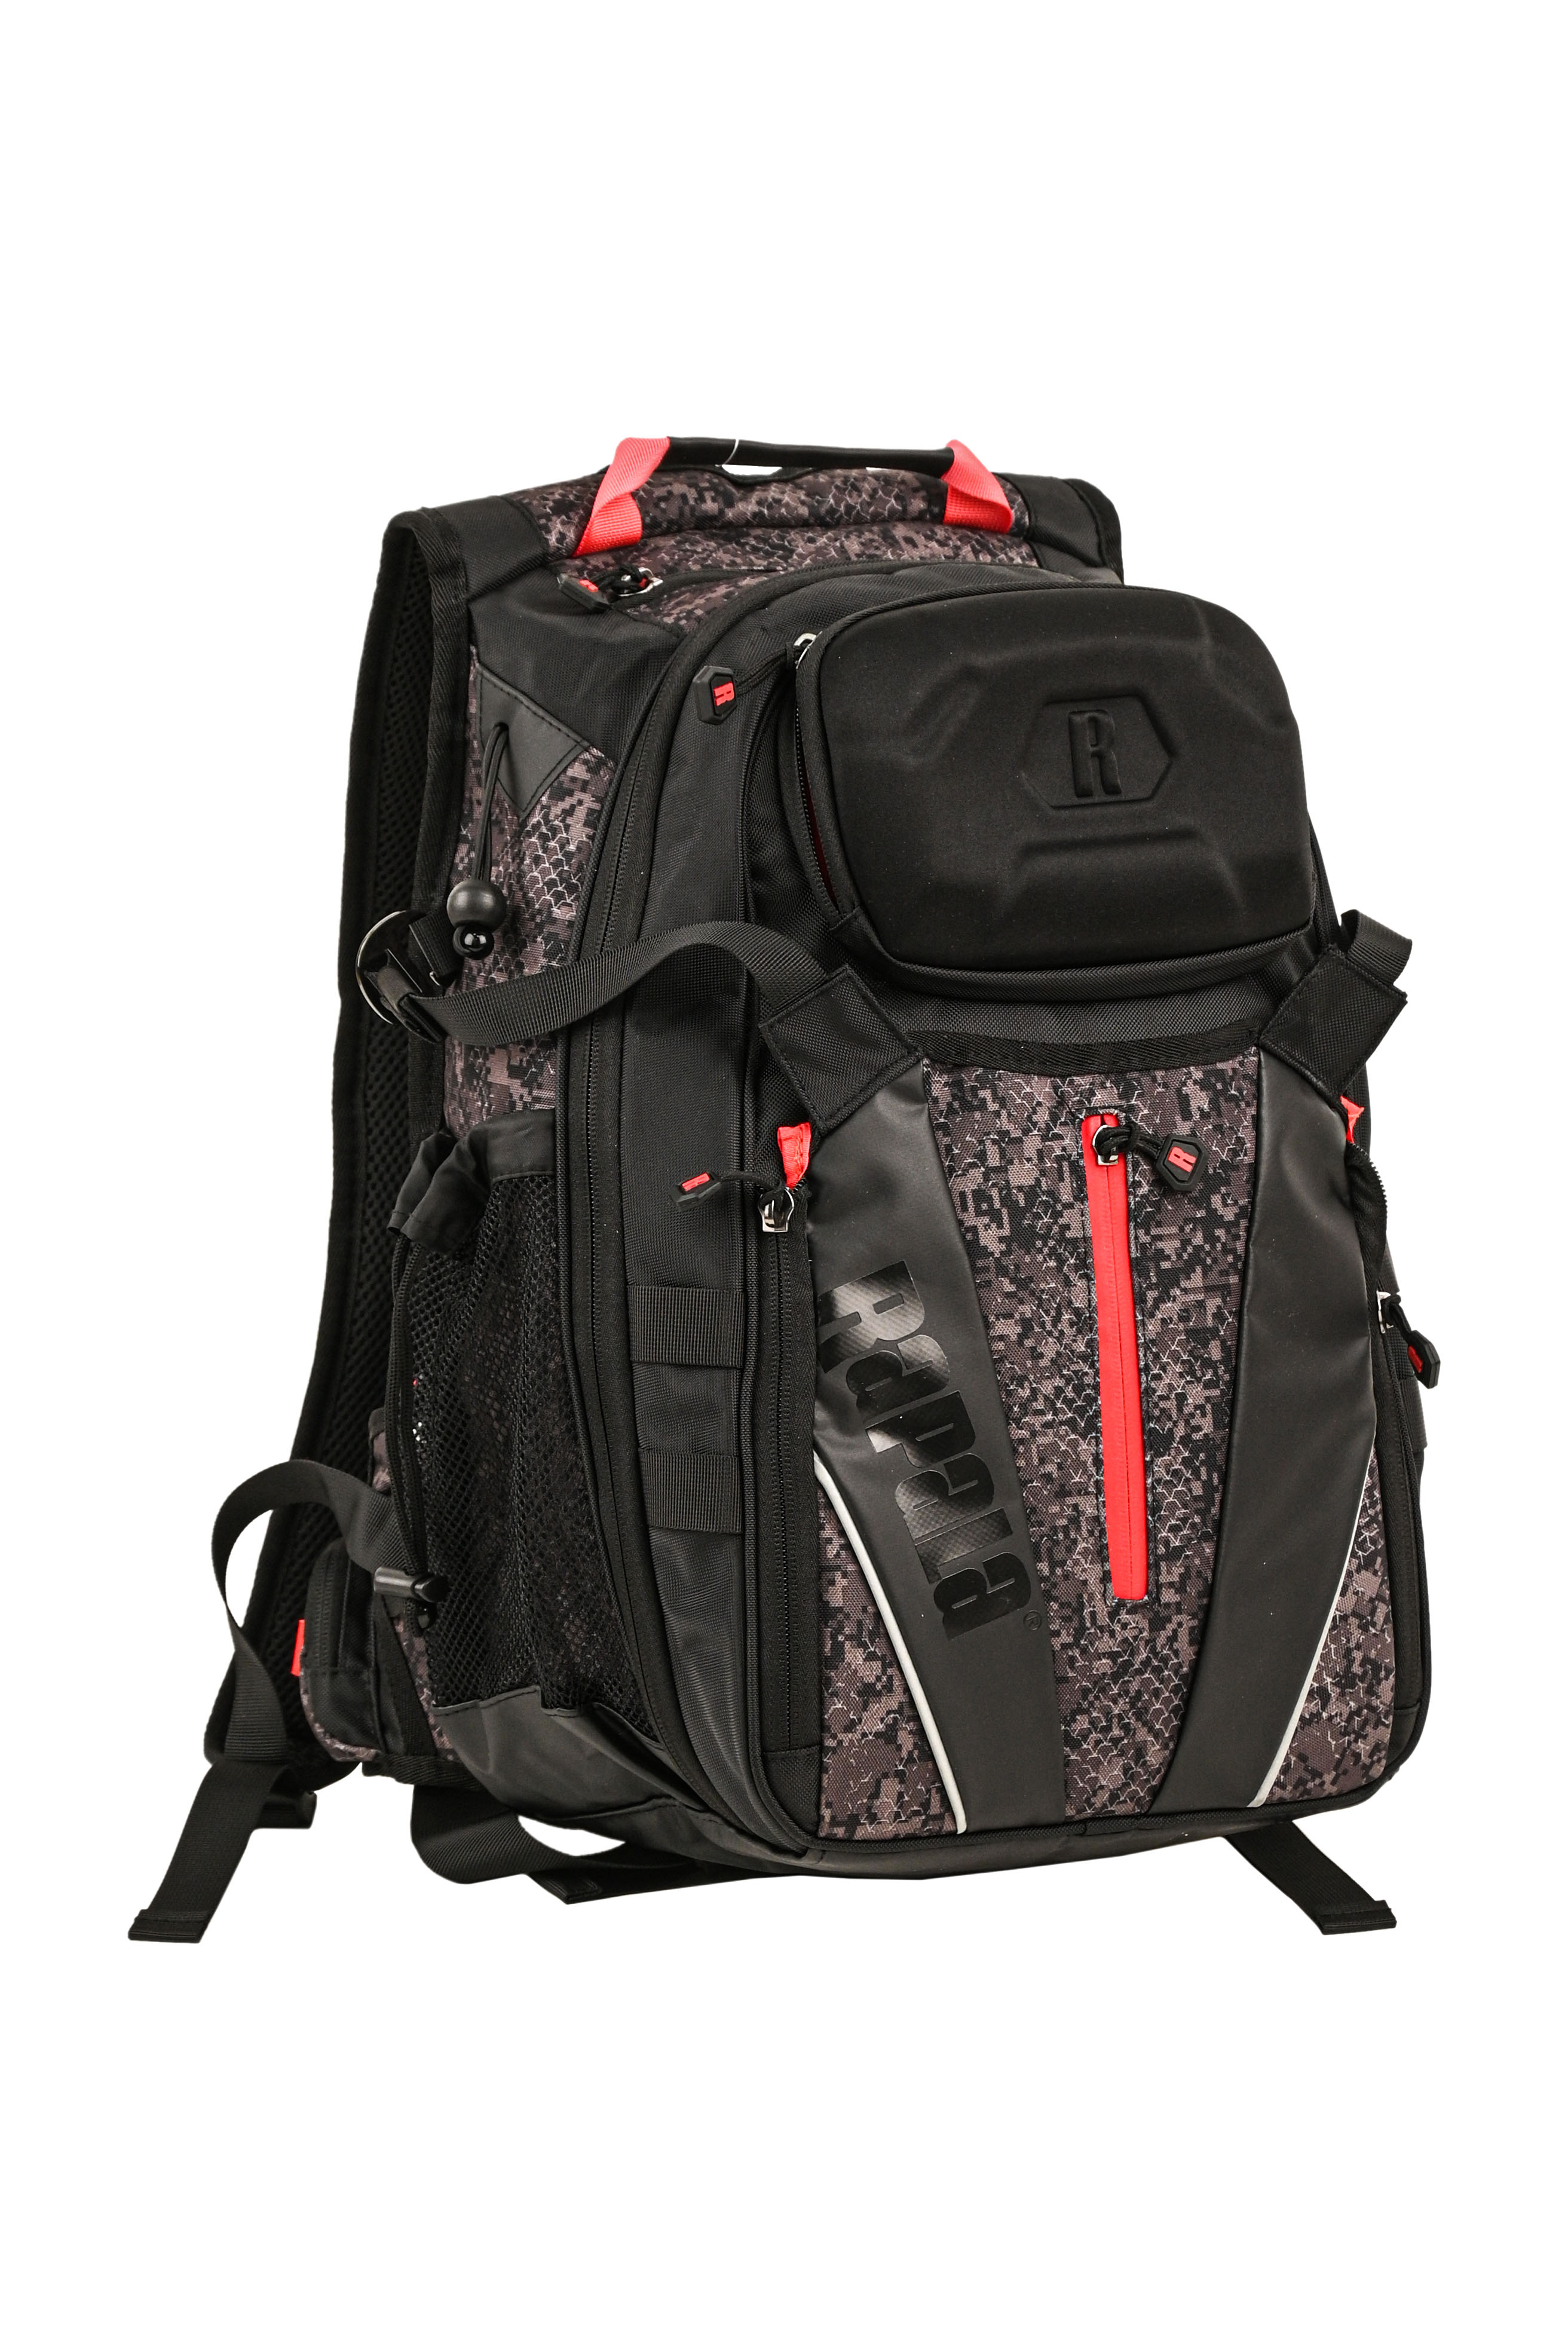 Рюкзак Rapala Urban back pack со съемной поясной сумкой